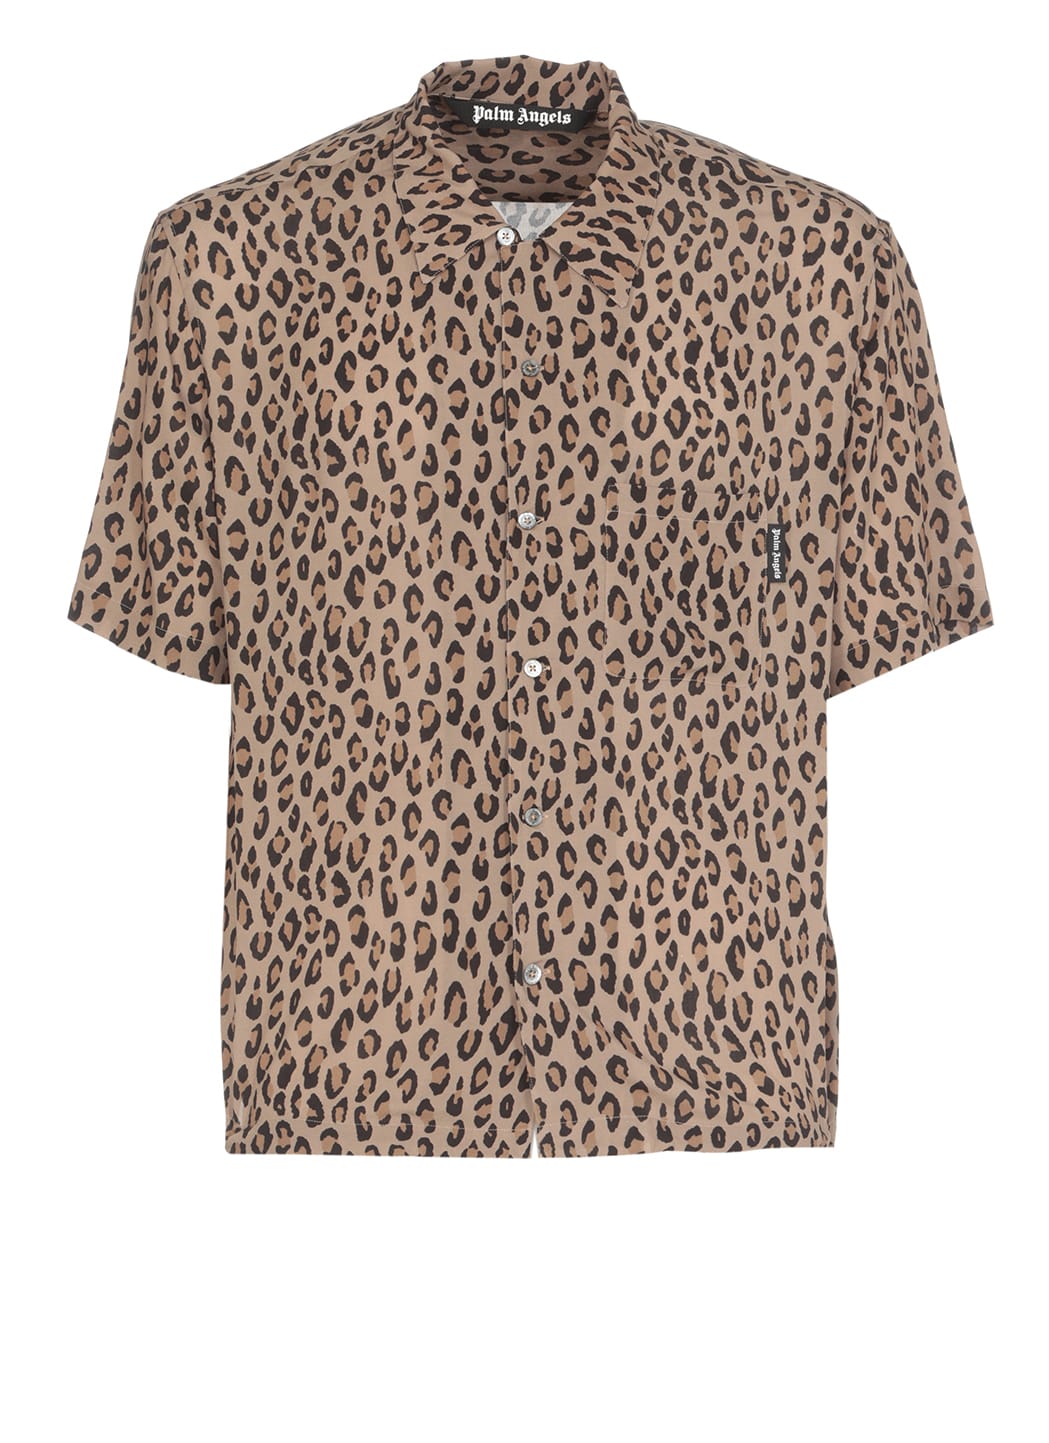 Palm Angels Leopard Shirt